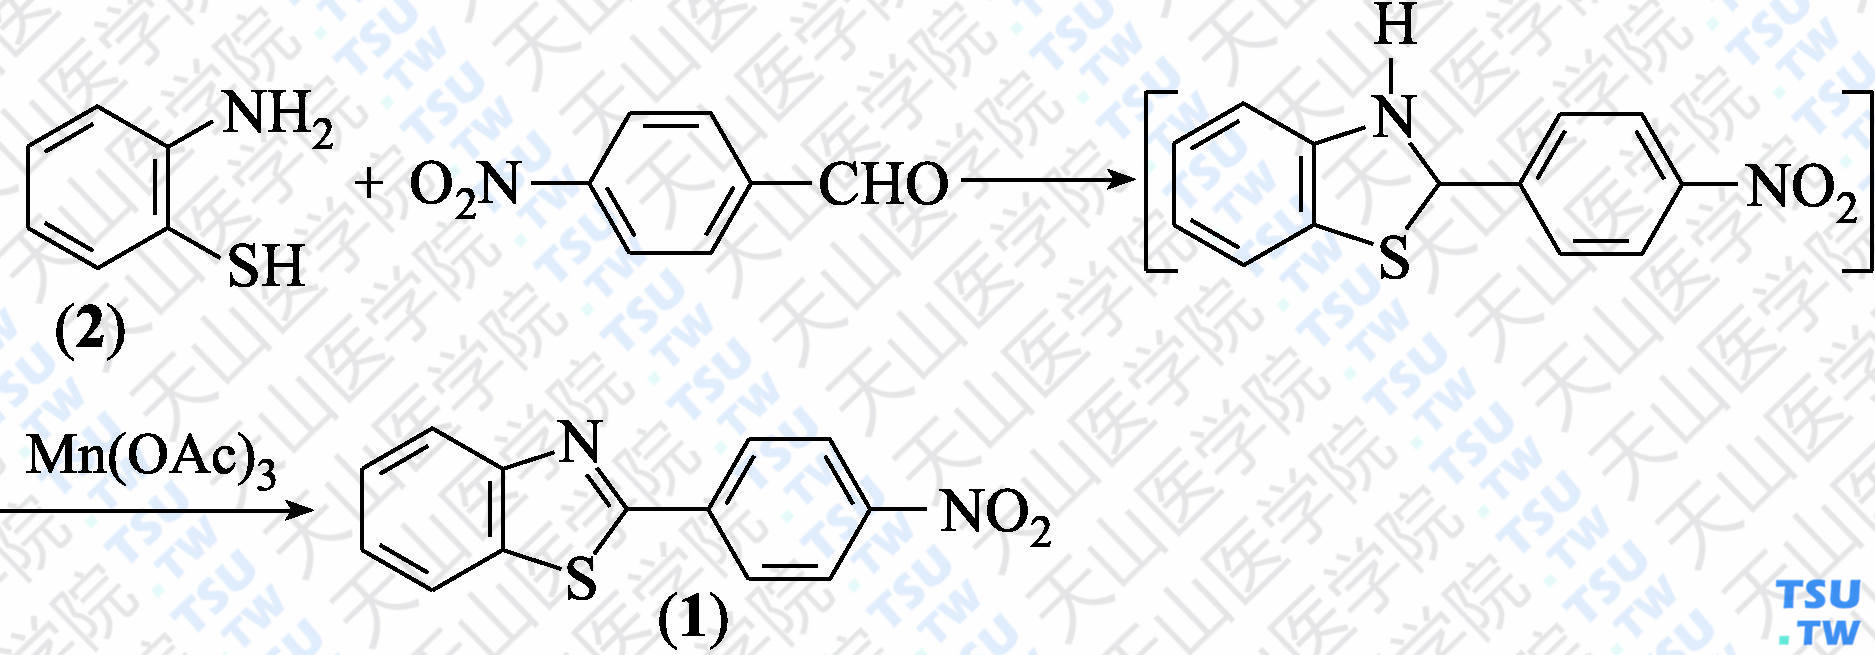 2-（4-硝基苯基）苯并噻唑（分子式：C<sub>13</sub>H<sub>8</sub>N<sub>2</sub>O<sub>2</sub>S）的合成方法路线及其结构式